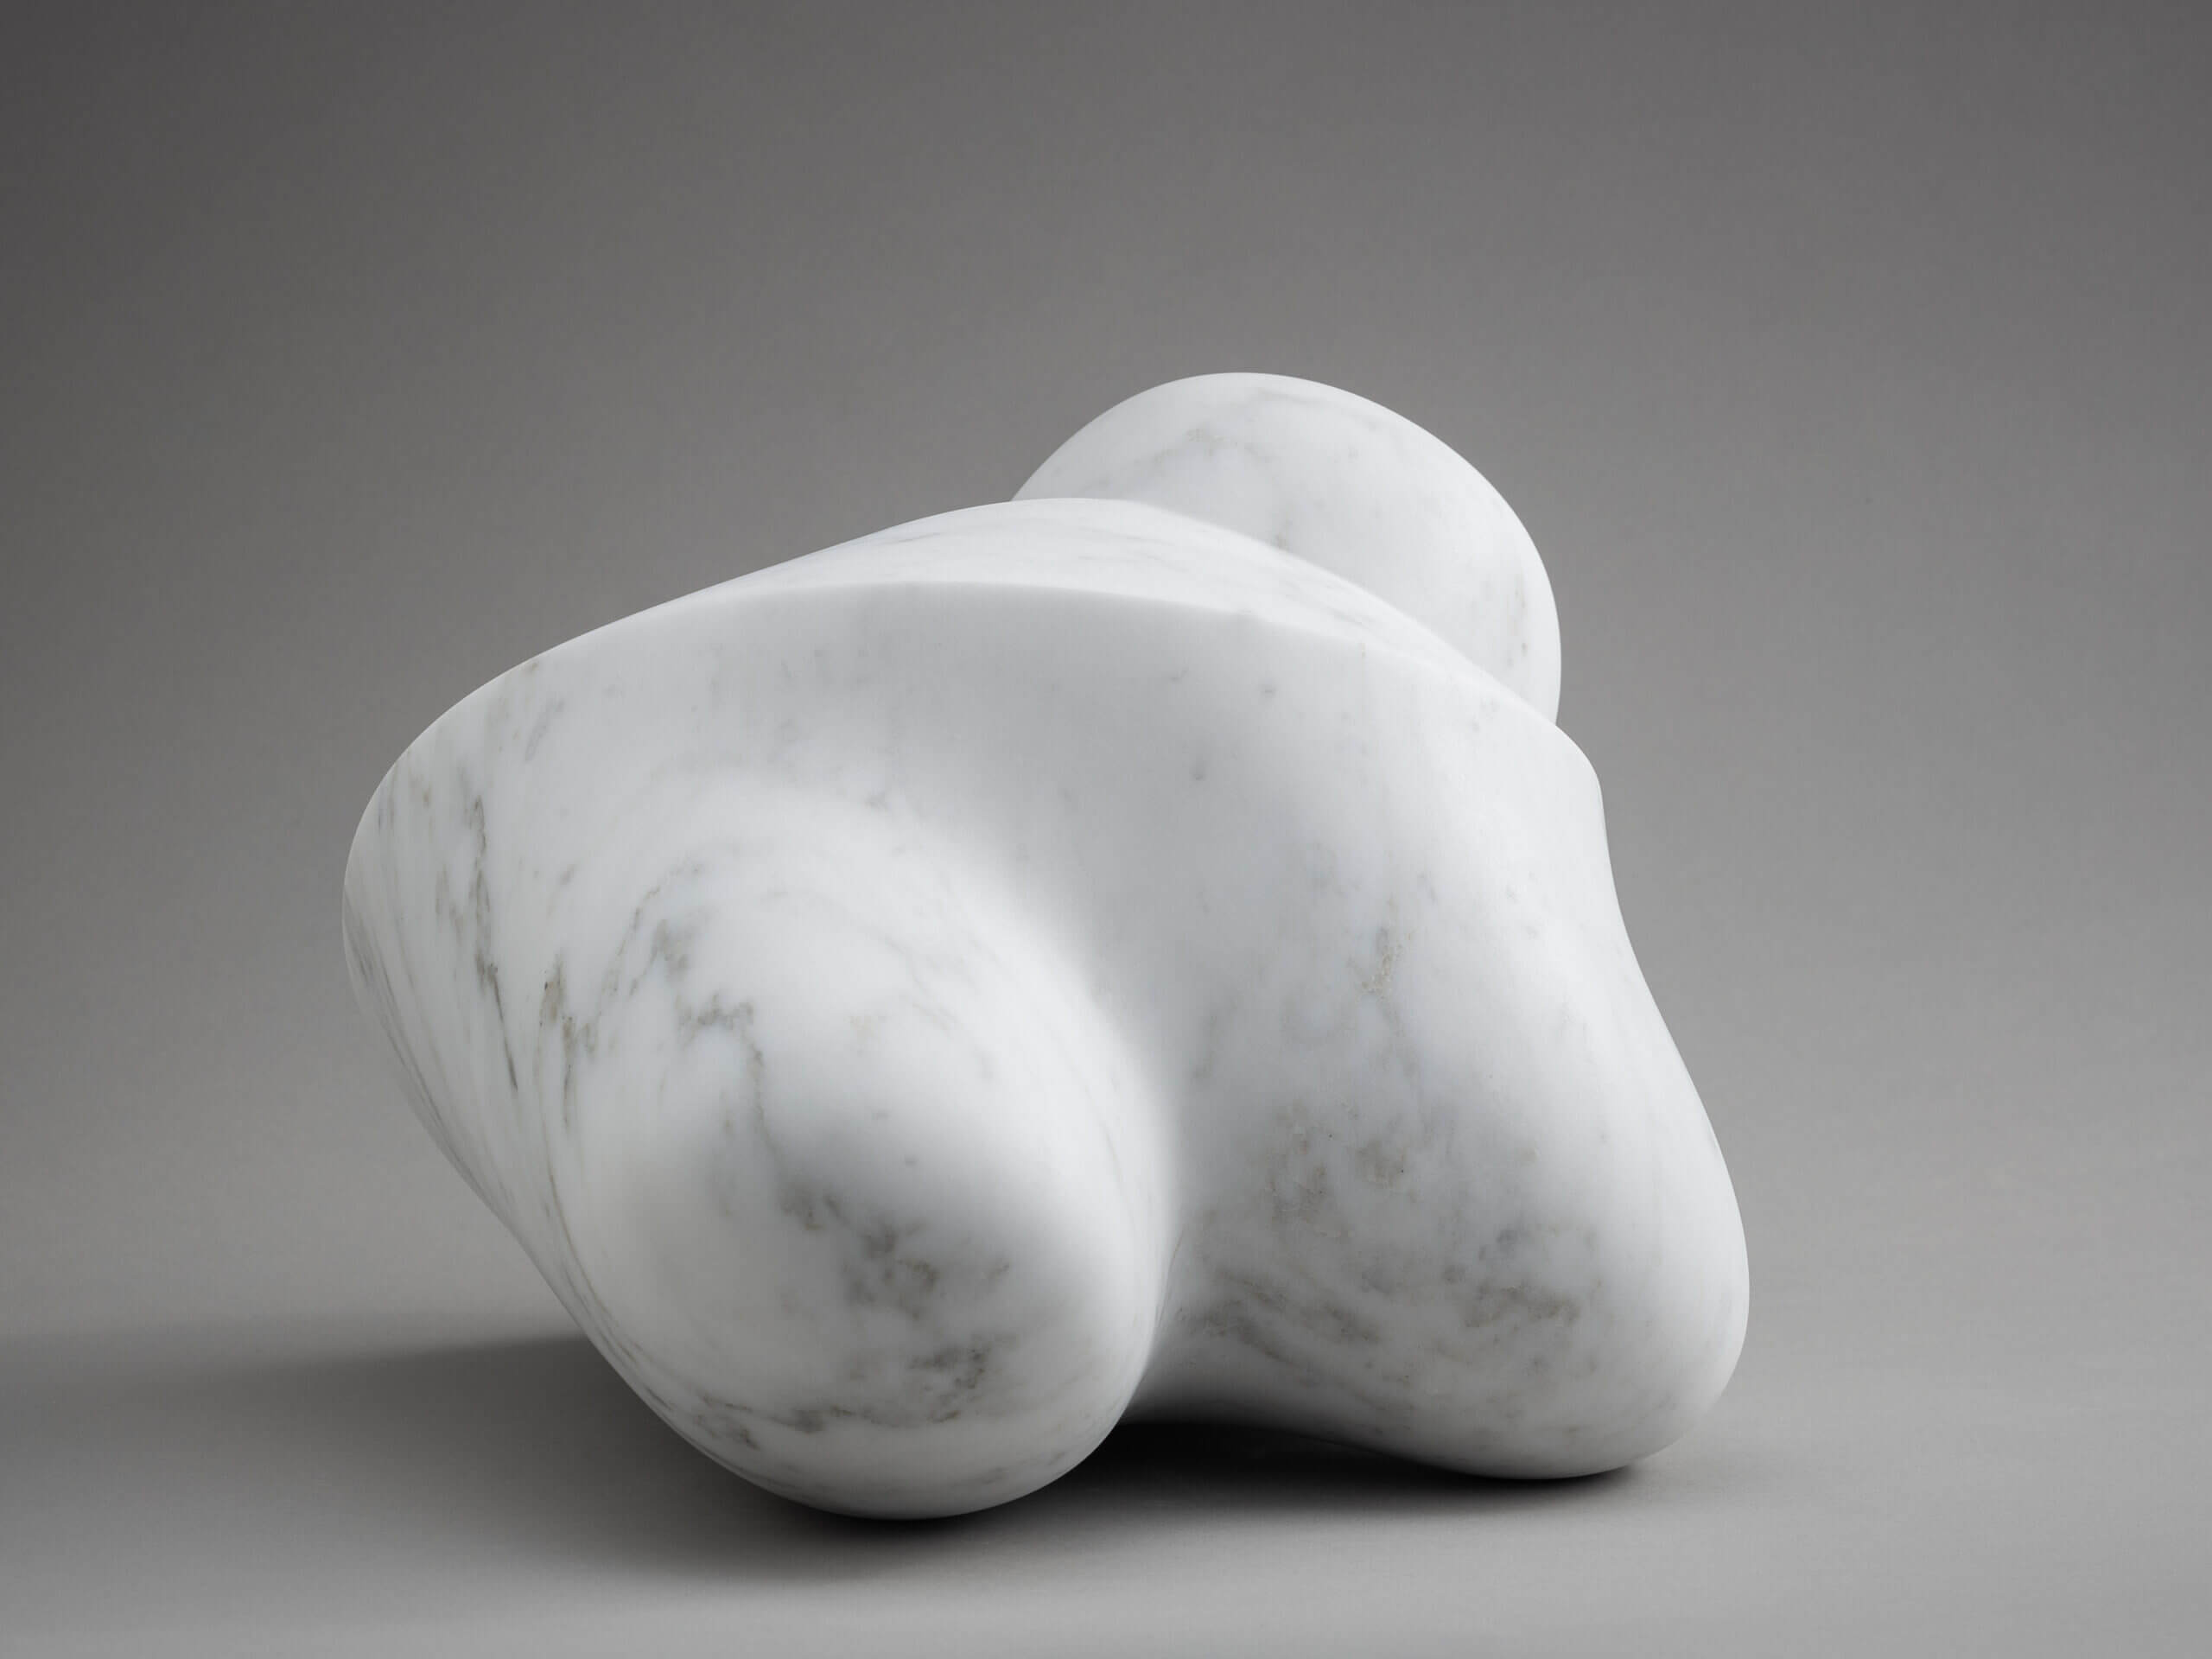 Eilis O'Connell, 'Imatra', Carrara marble, 2021, series of 3, 22 x 24 x 26cm, Solomon Fine Art